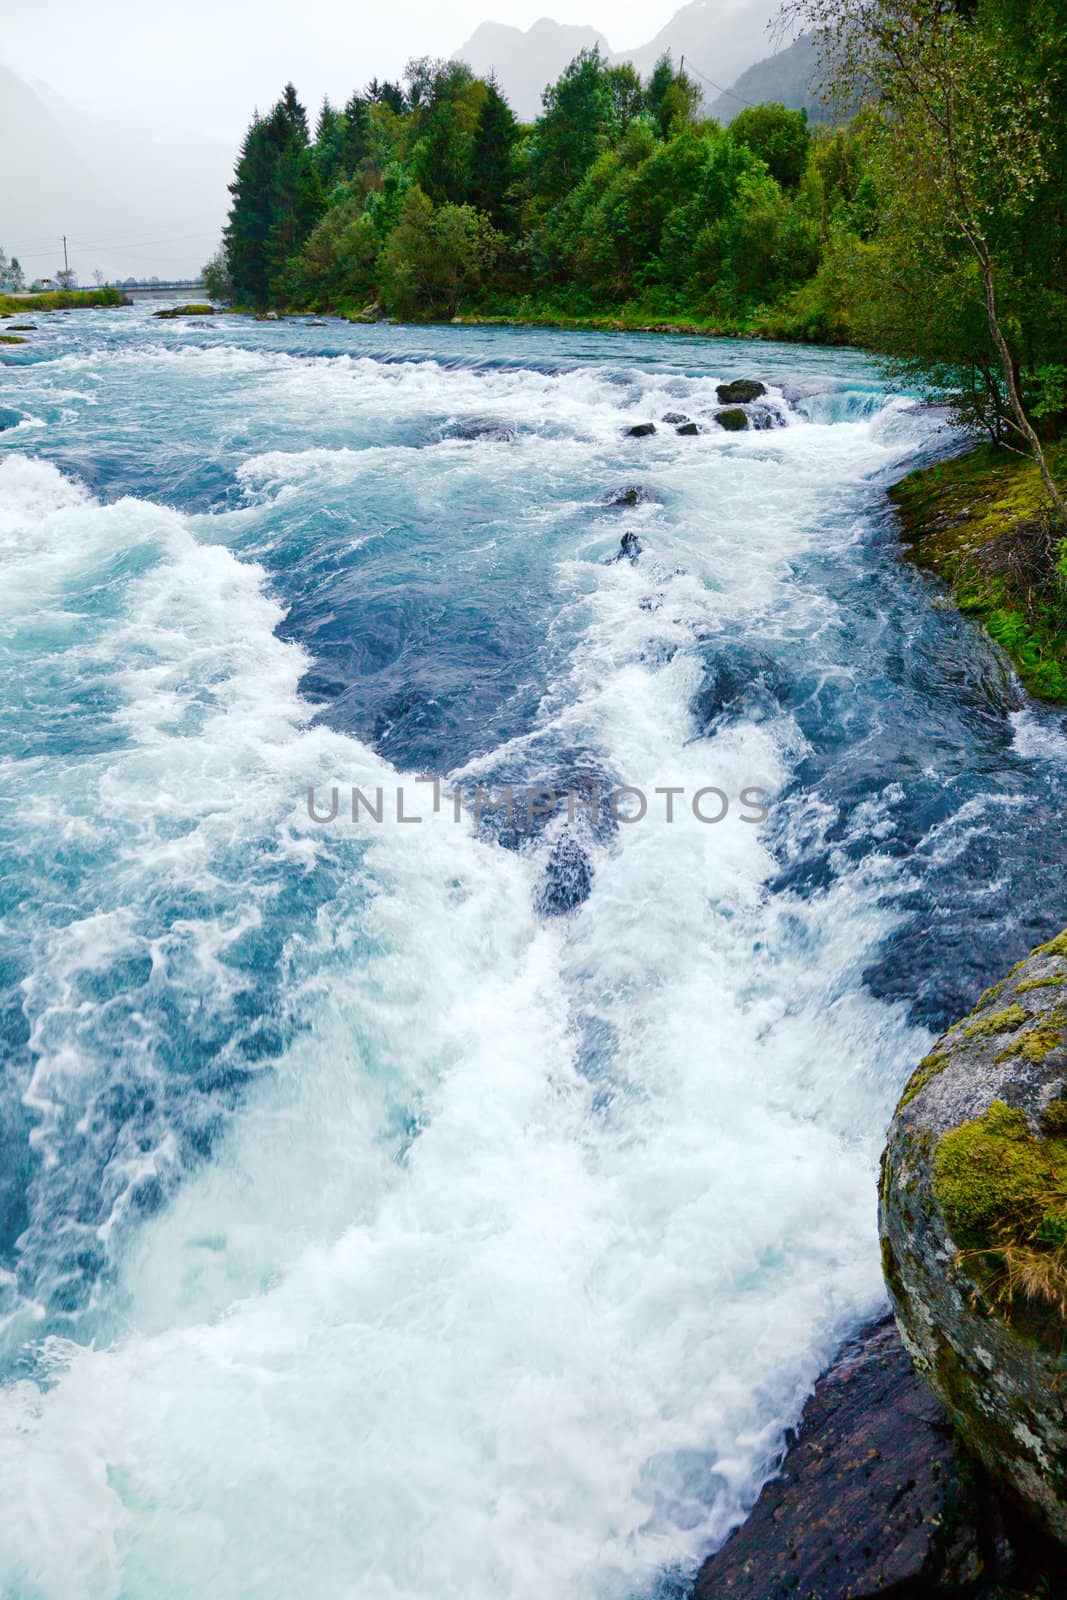 Milky blue glacial water of Briksdal River in Norway